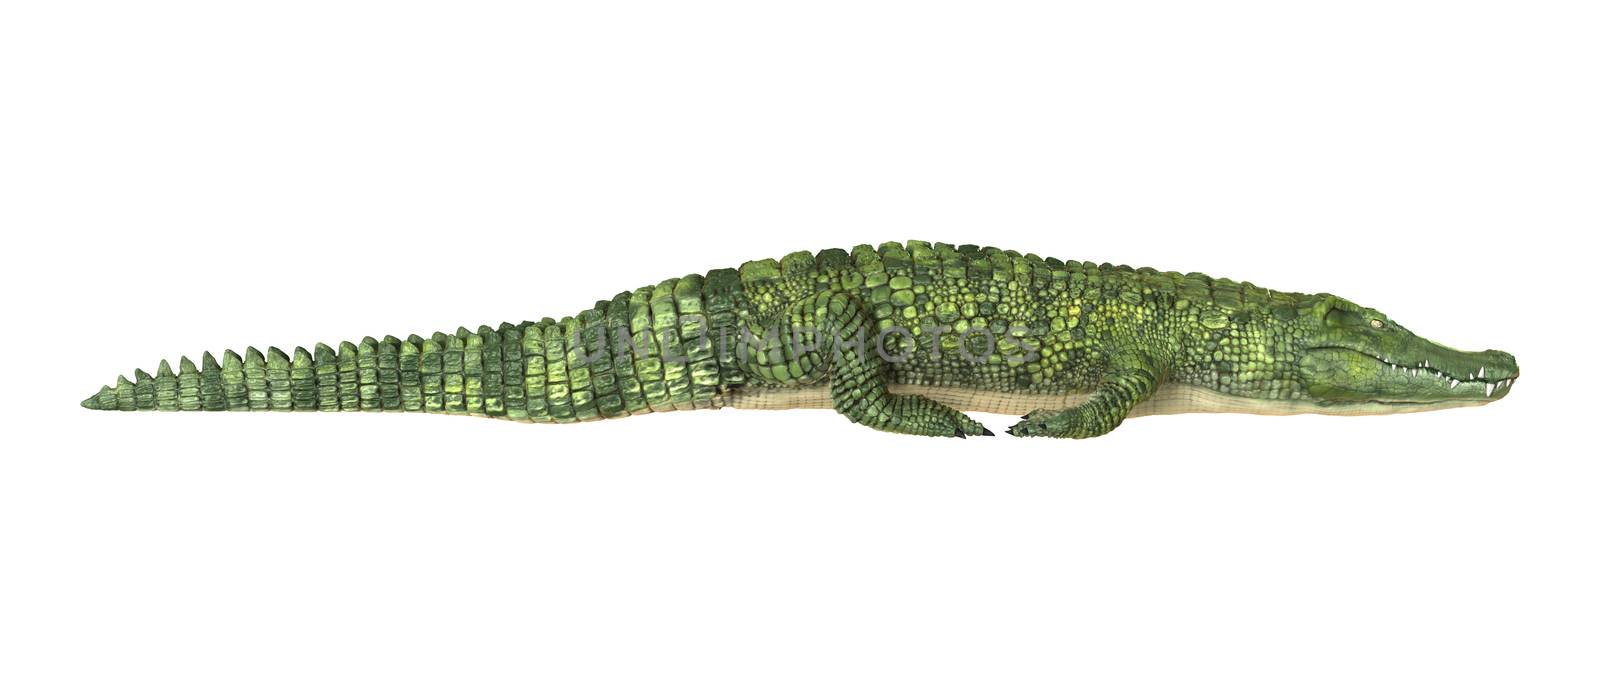 Crocodile by Vac